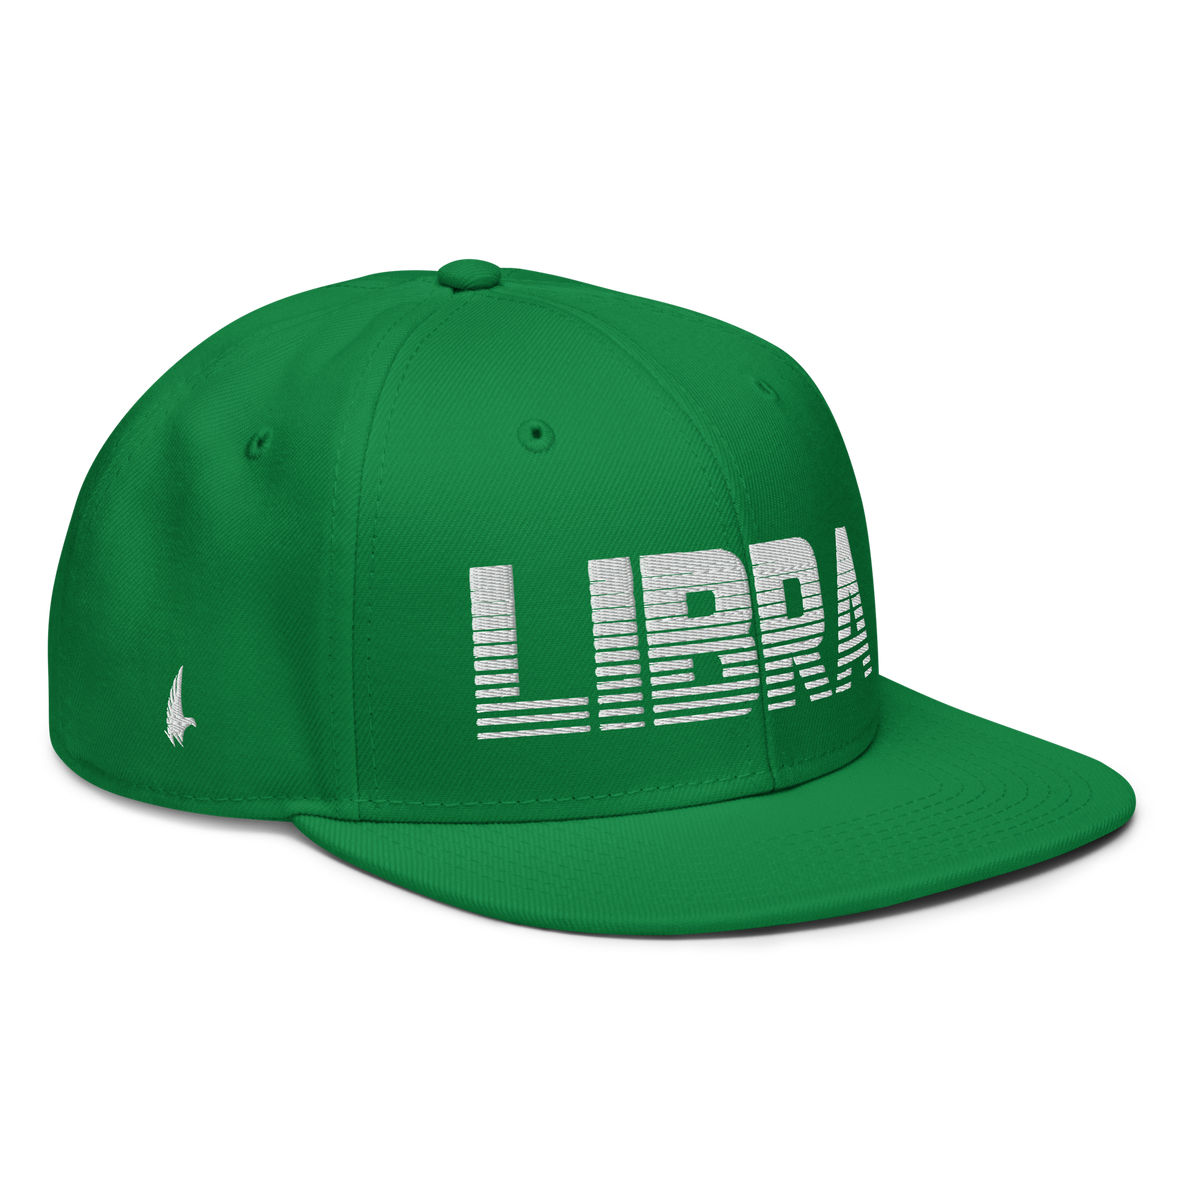 Libra Snapback Hat - Green / White - Loyalty Vibes